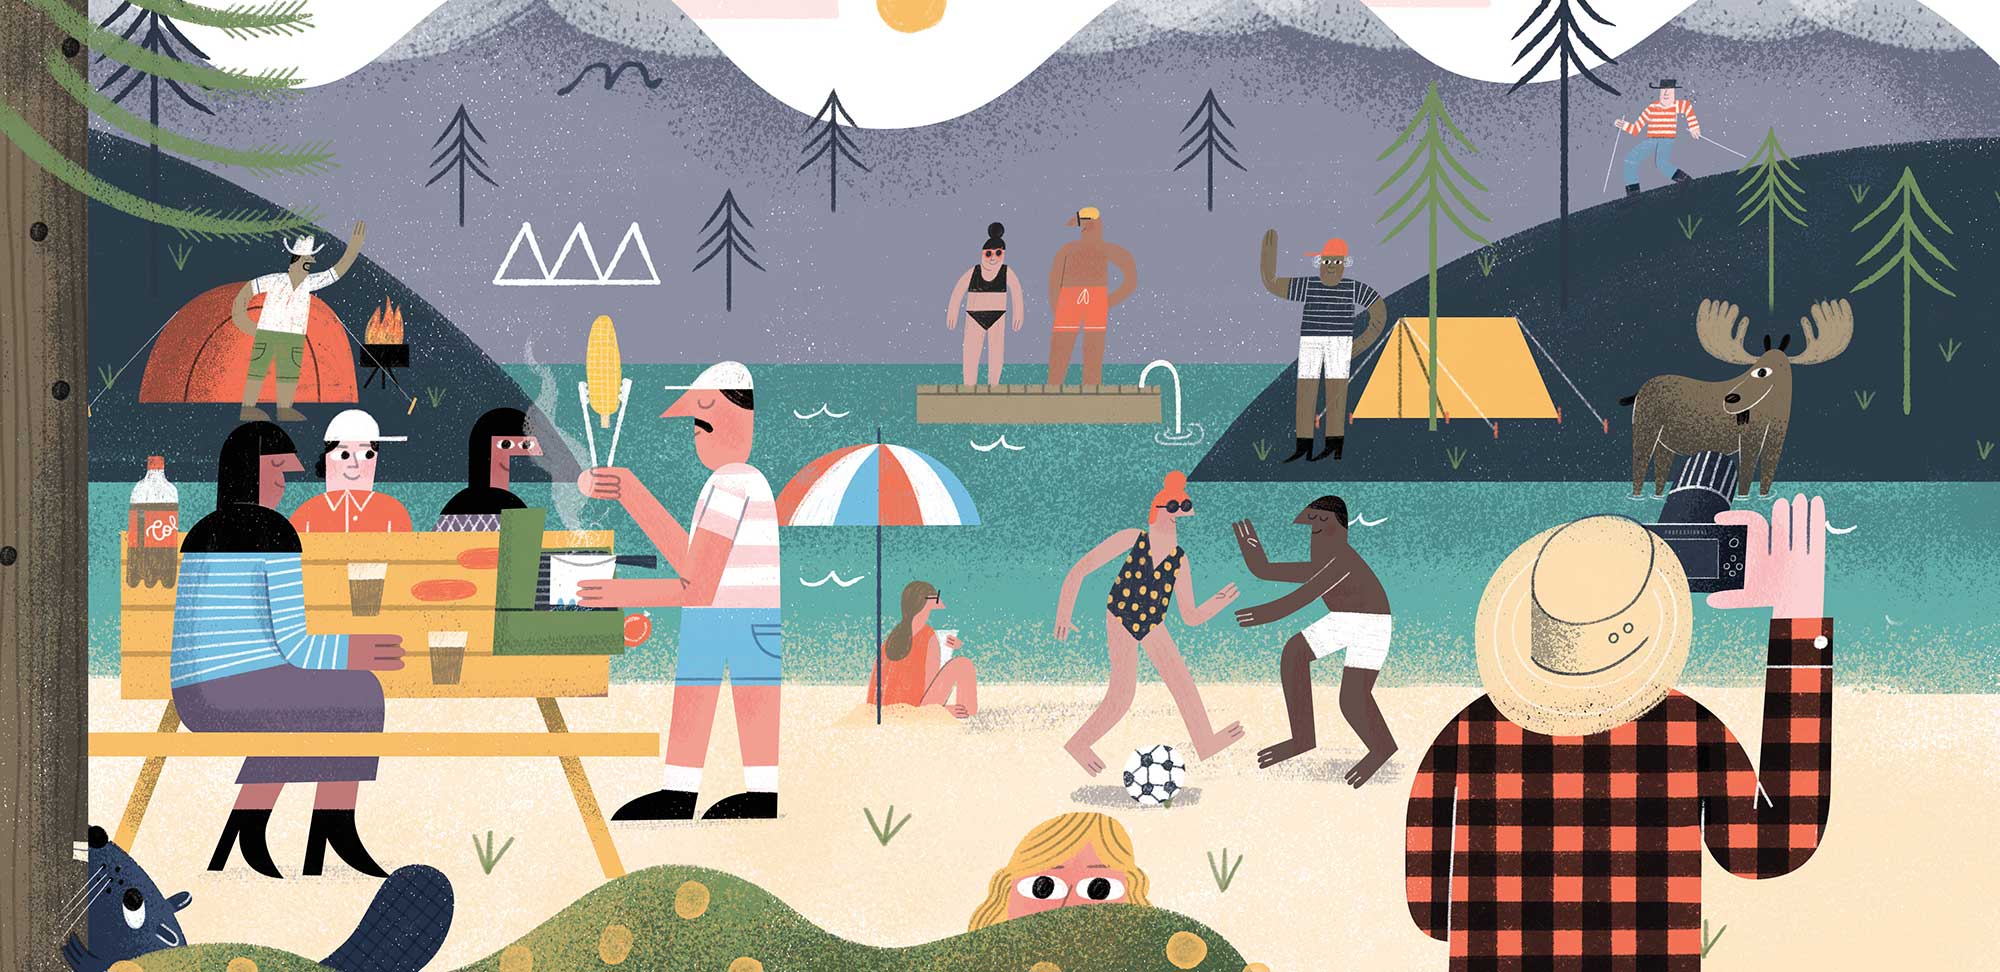 Illustration of diverse set of people enjoying idyllic scene in Canadian nature